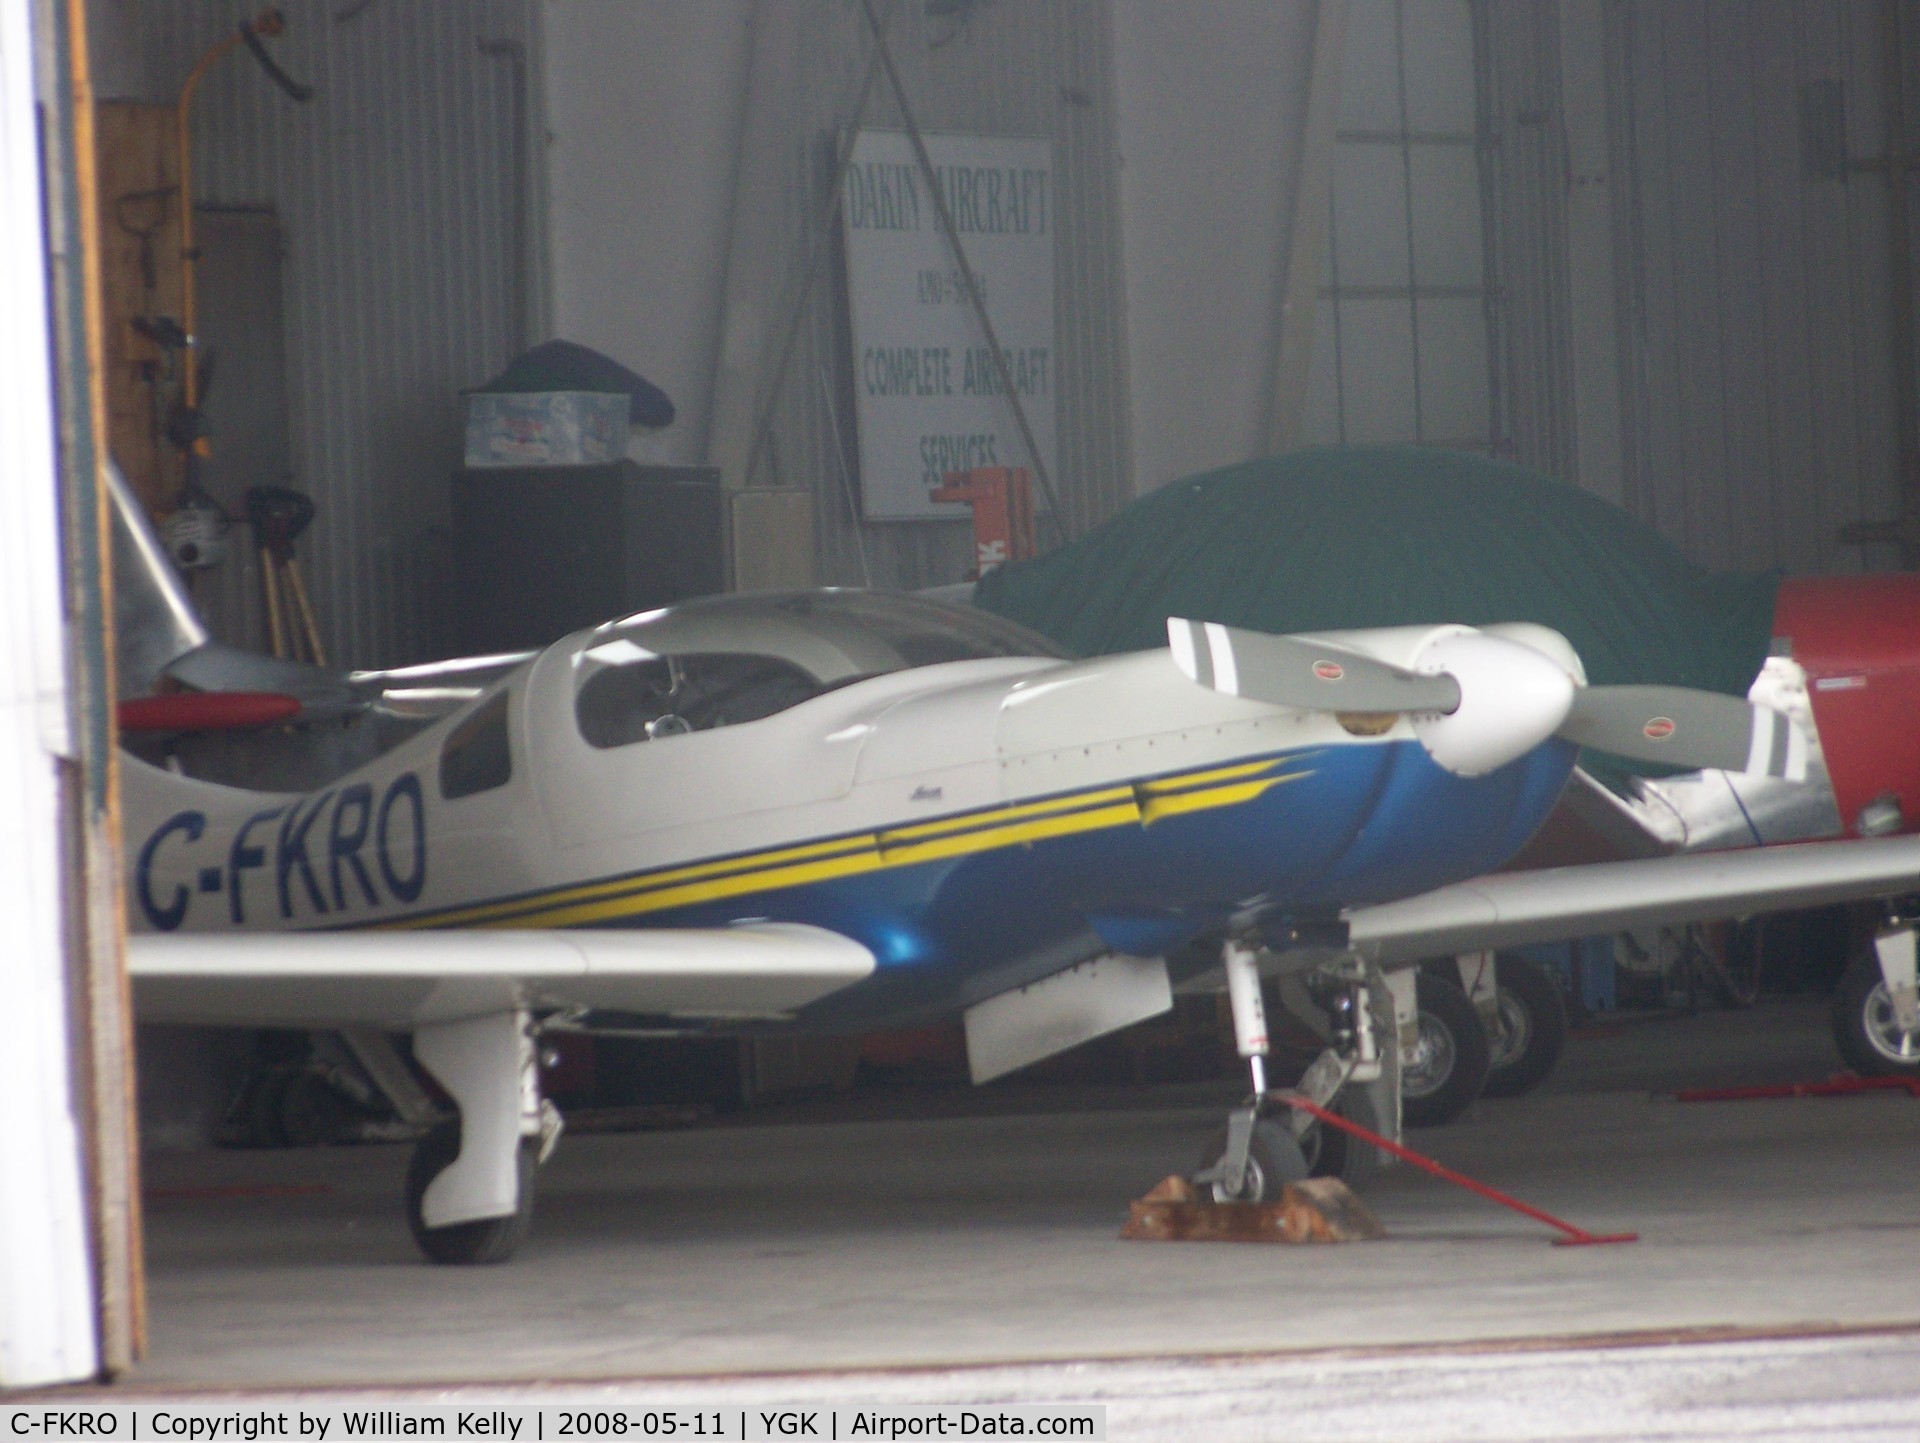 C-FKRO, 2002 Lancair 320/360 C/N 913-320-754 SFB, In Central Airways hanger at YGK